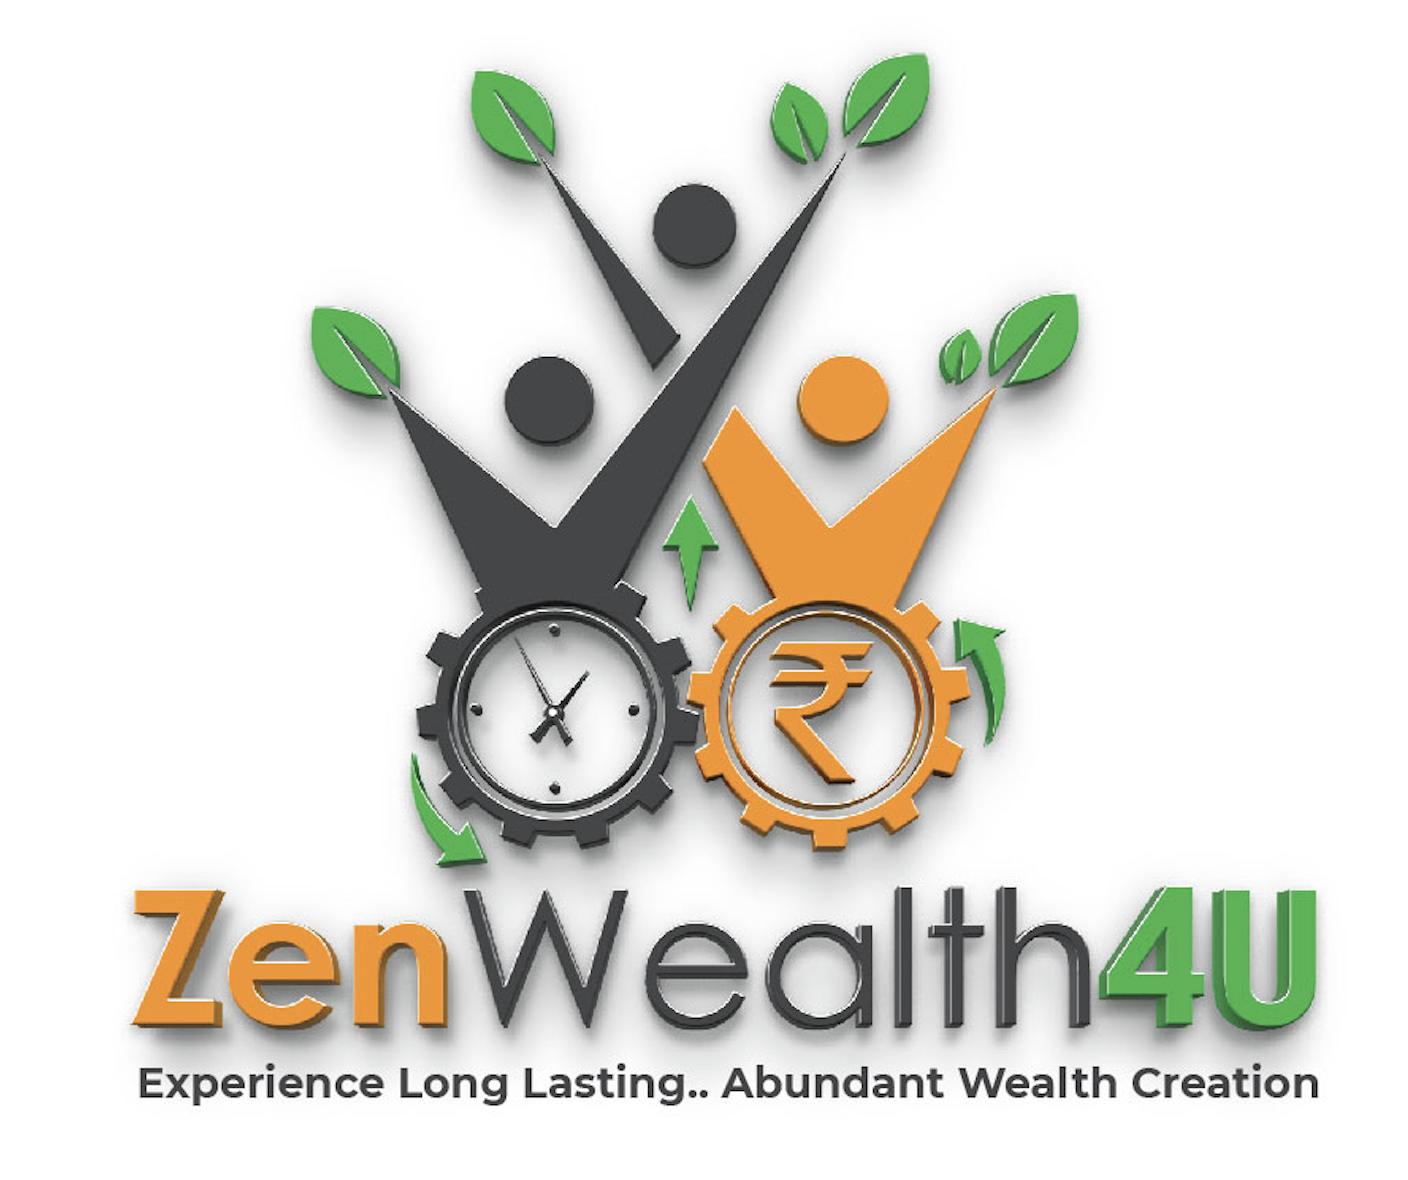 ZenWealth4U Financial Services